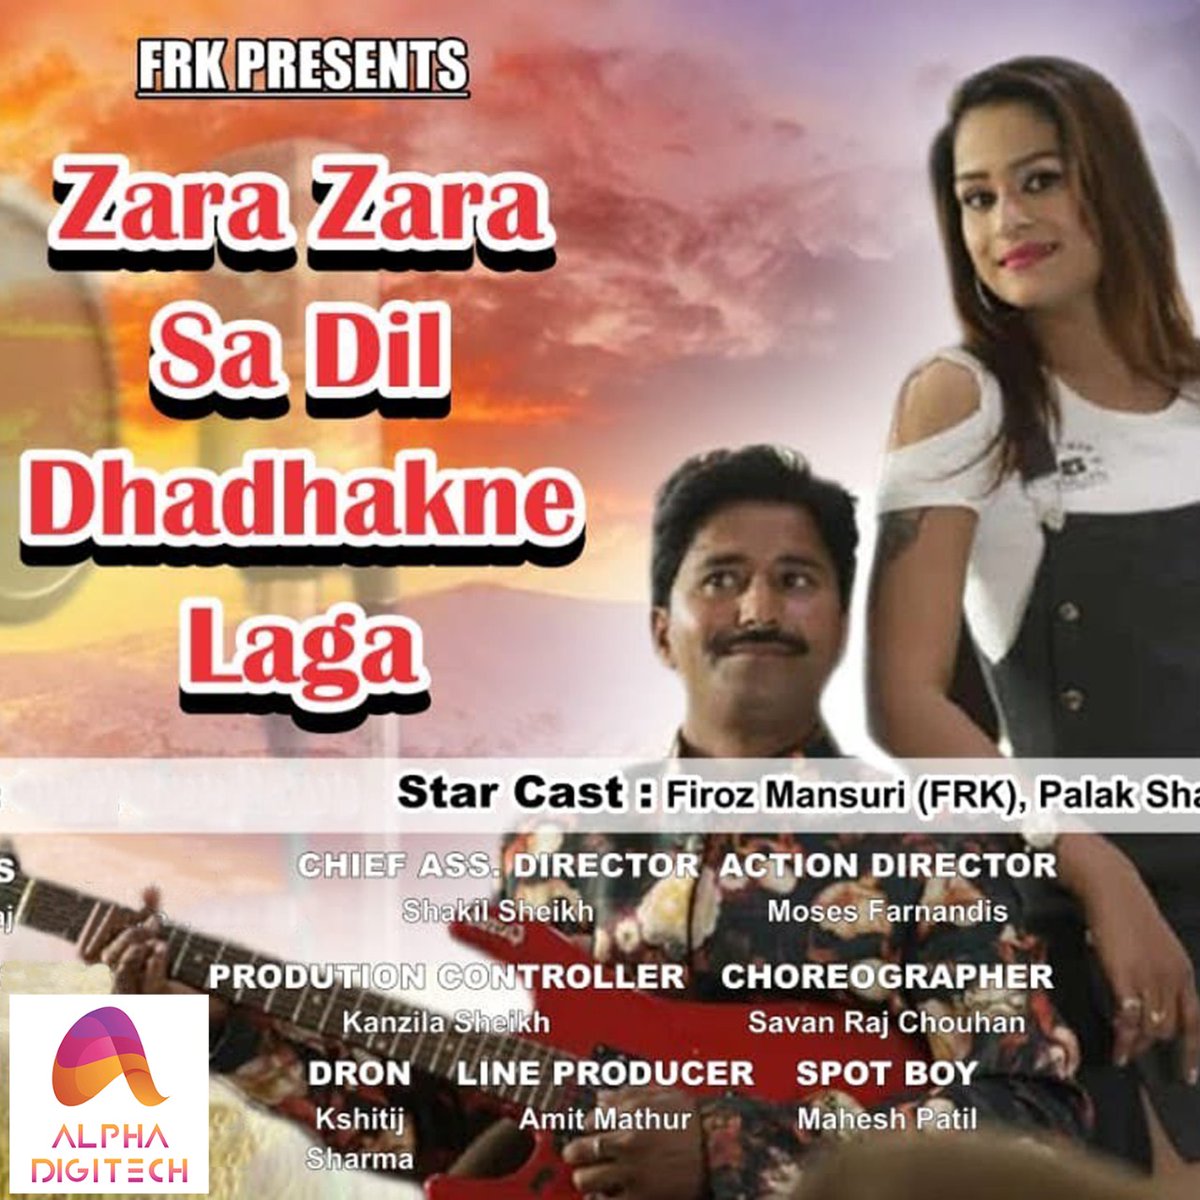 🎧Tune-in to Zara Zara Sa ▶️ youtu.be/-w_ZoMND14k and have a splendid evening.

#ZaraZaraSa #DilDhadakneLaga #PrinceNaveedKhan #FirozMansuri #DarshanMehta #SonaliMutha #hindisongs #trendingsong #indiansingers #music #hindisongcover #HindiAlbumSongs #BollywoodSongs